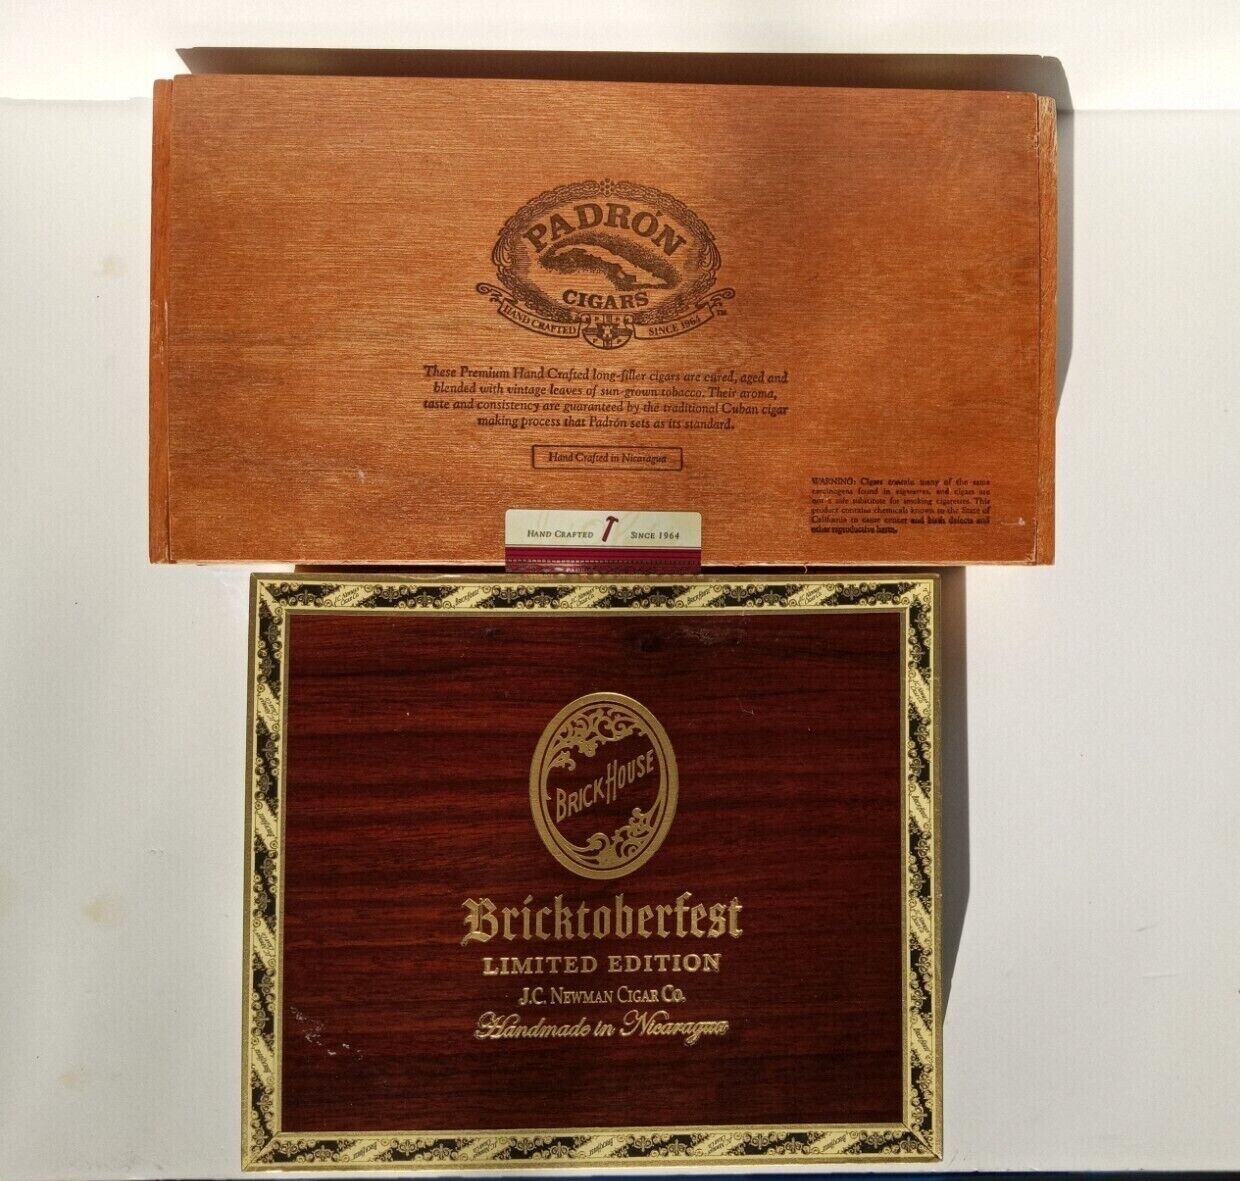  BrickHouse Bricktoberfest And Padron Since 1964 Edition  (Duo)